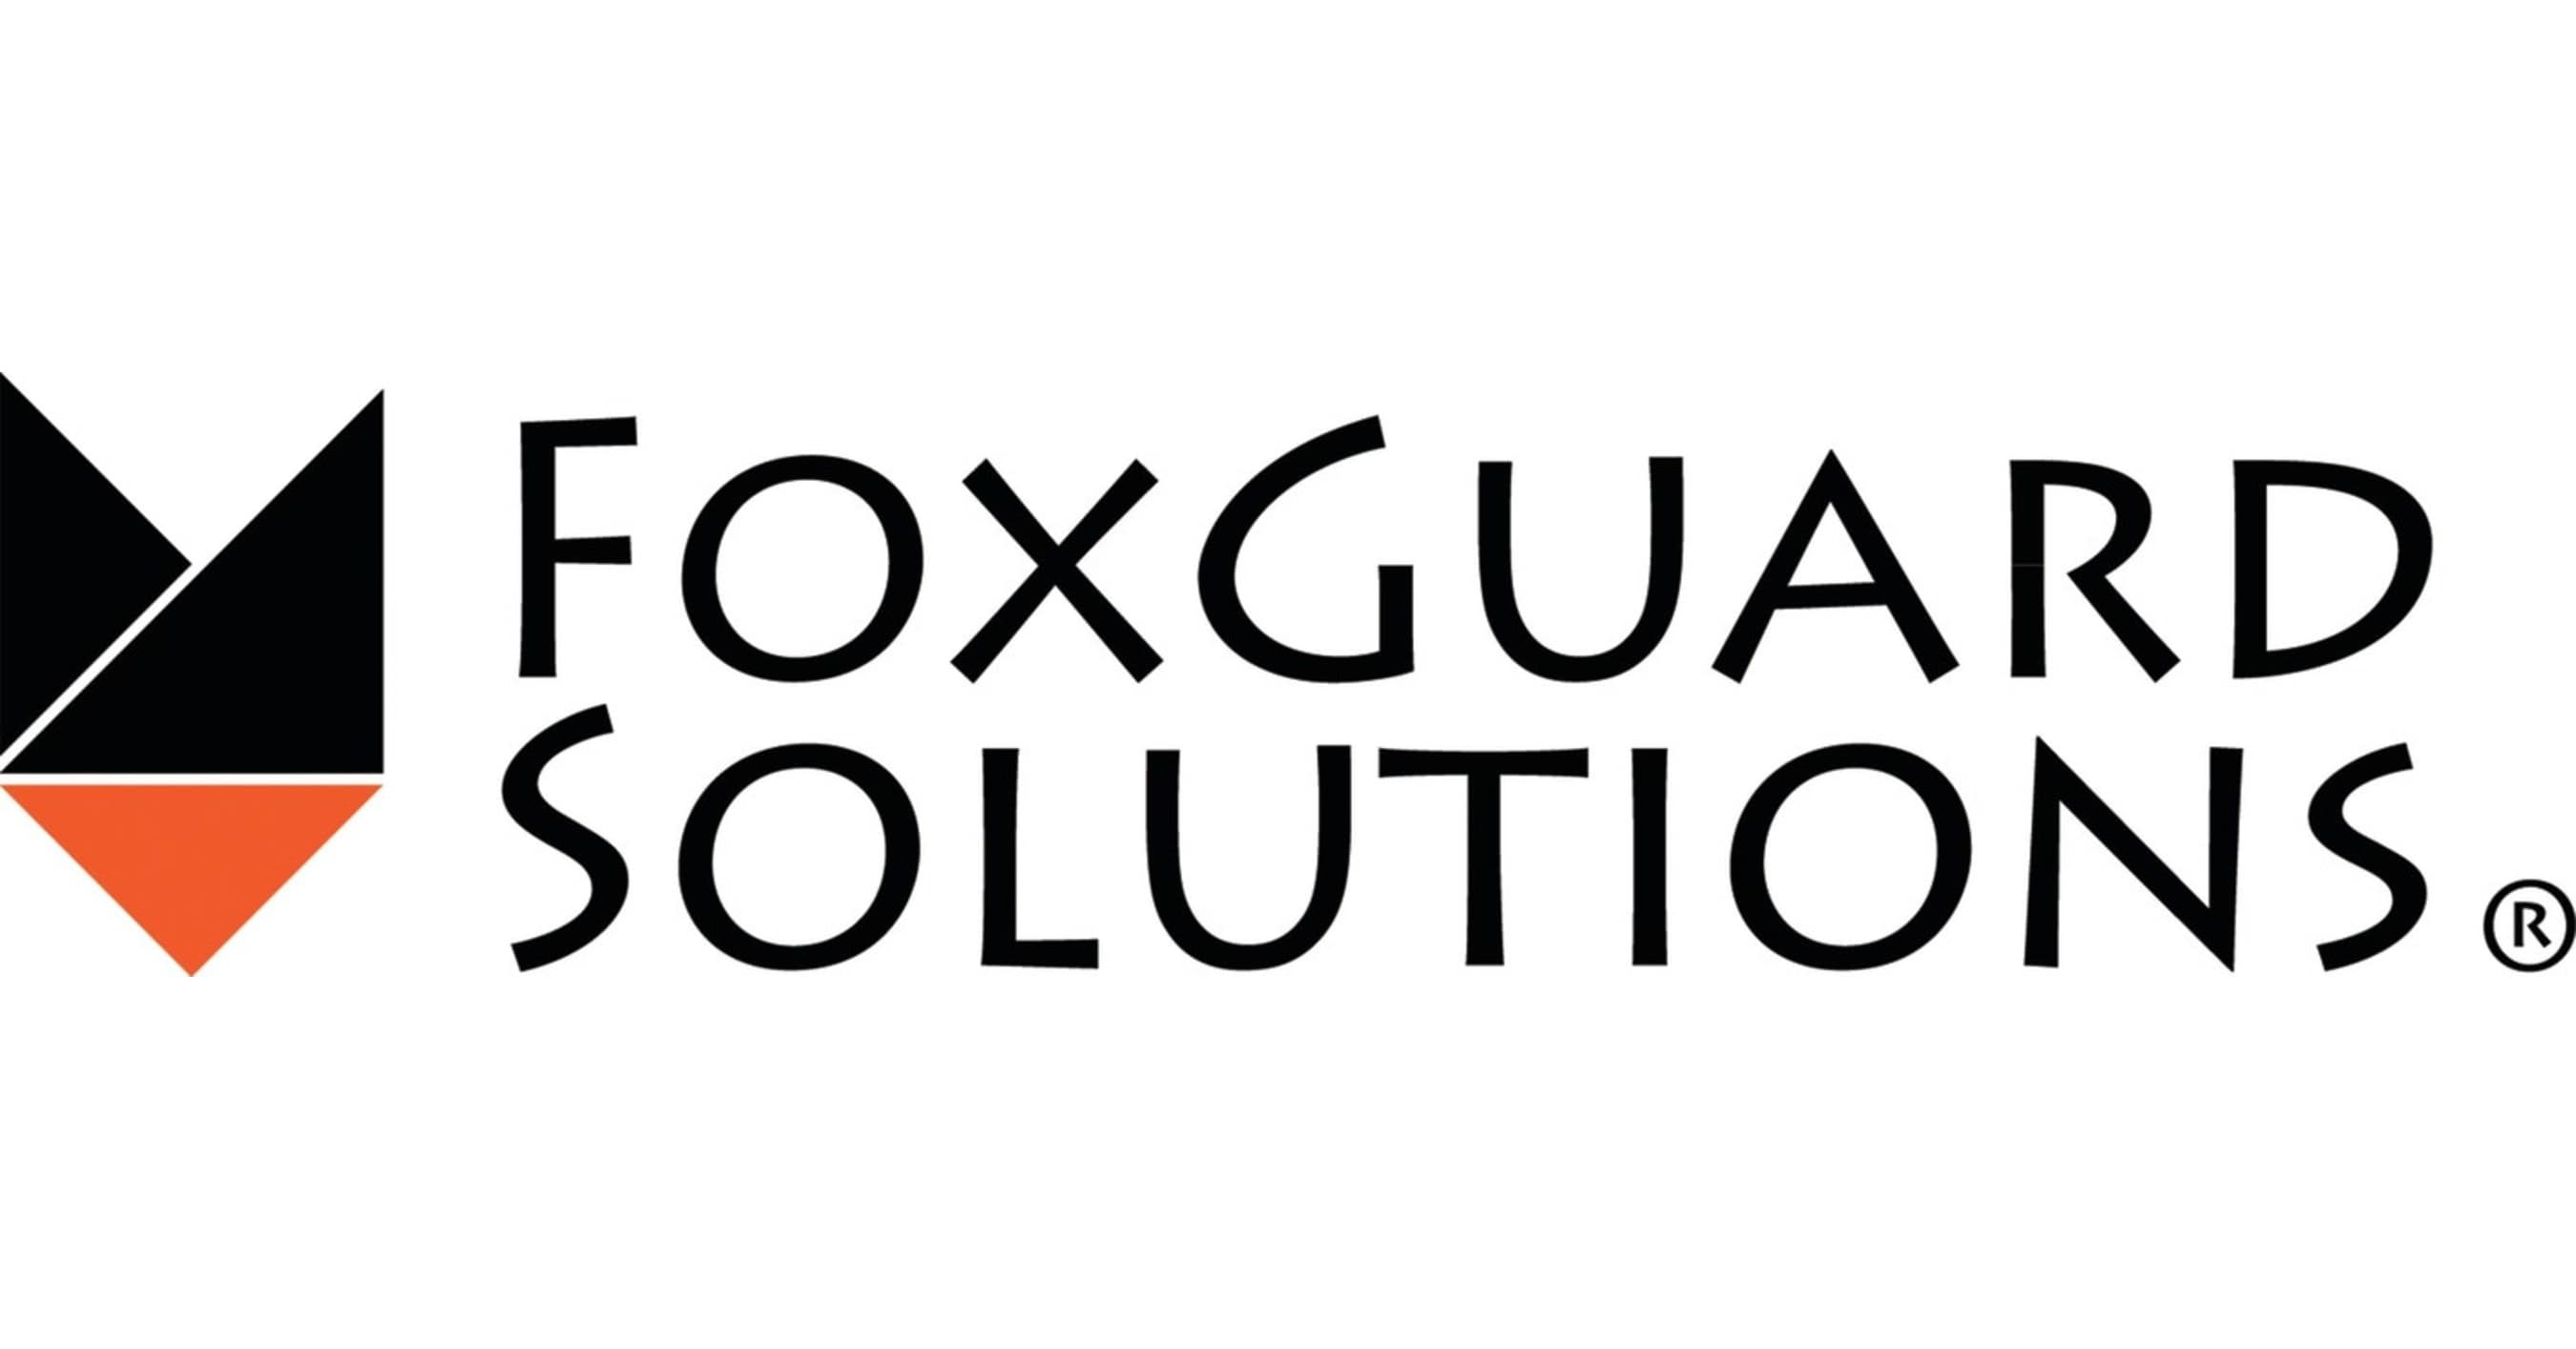 Foxguard Solutions logo